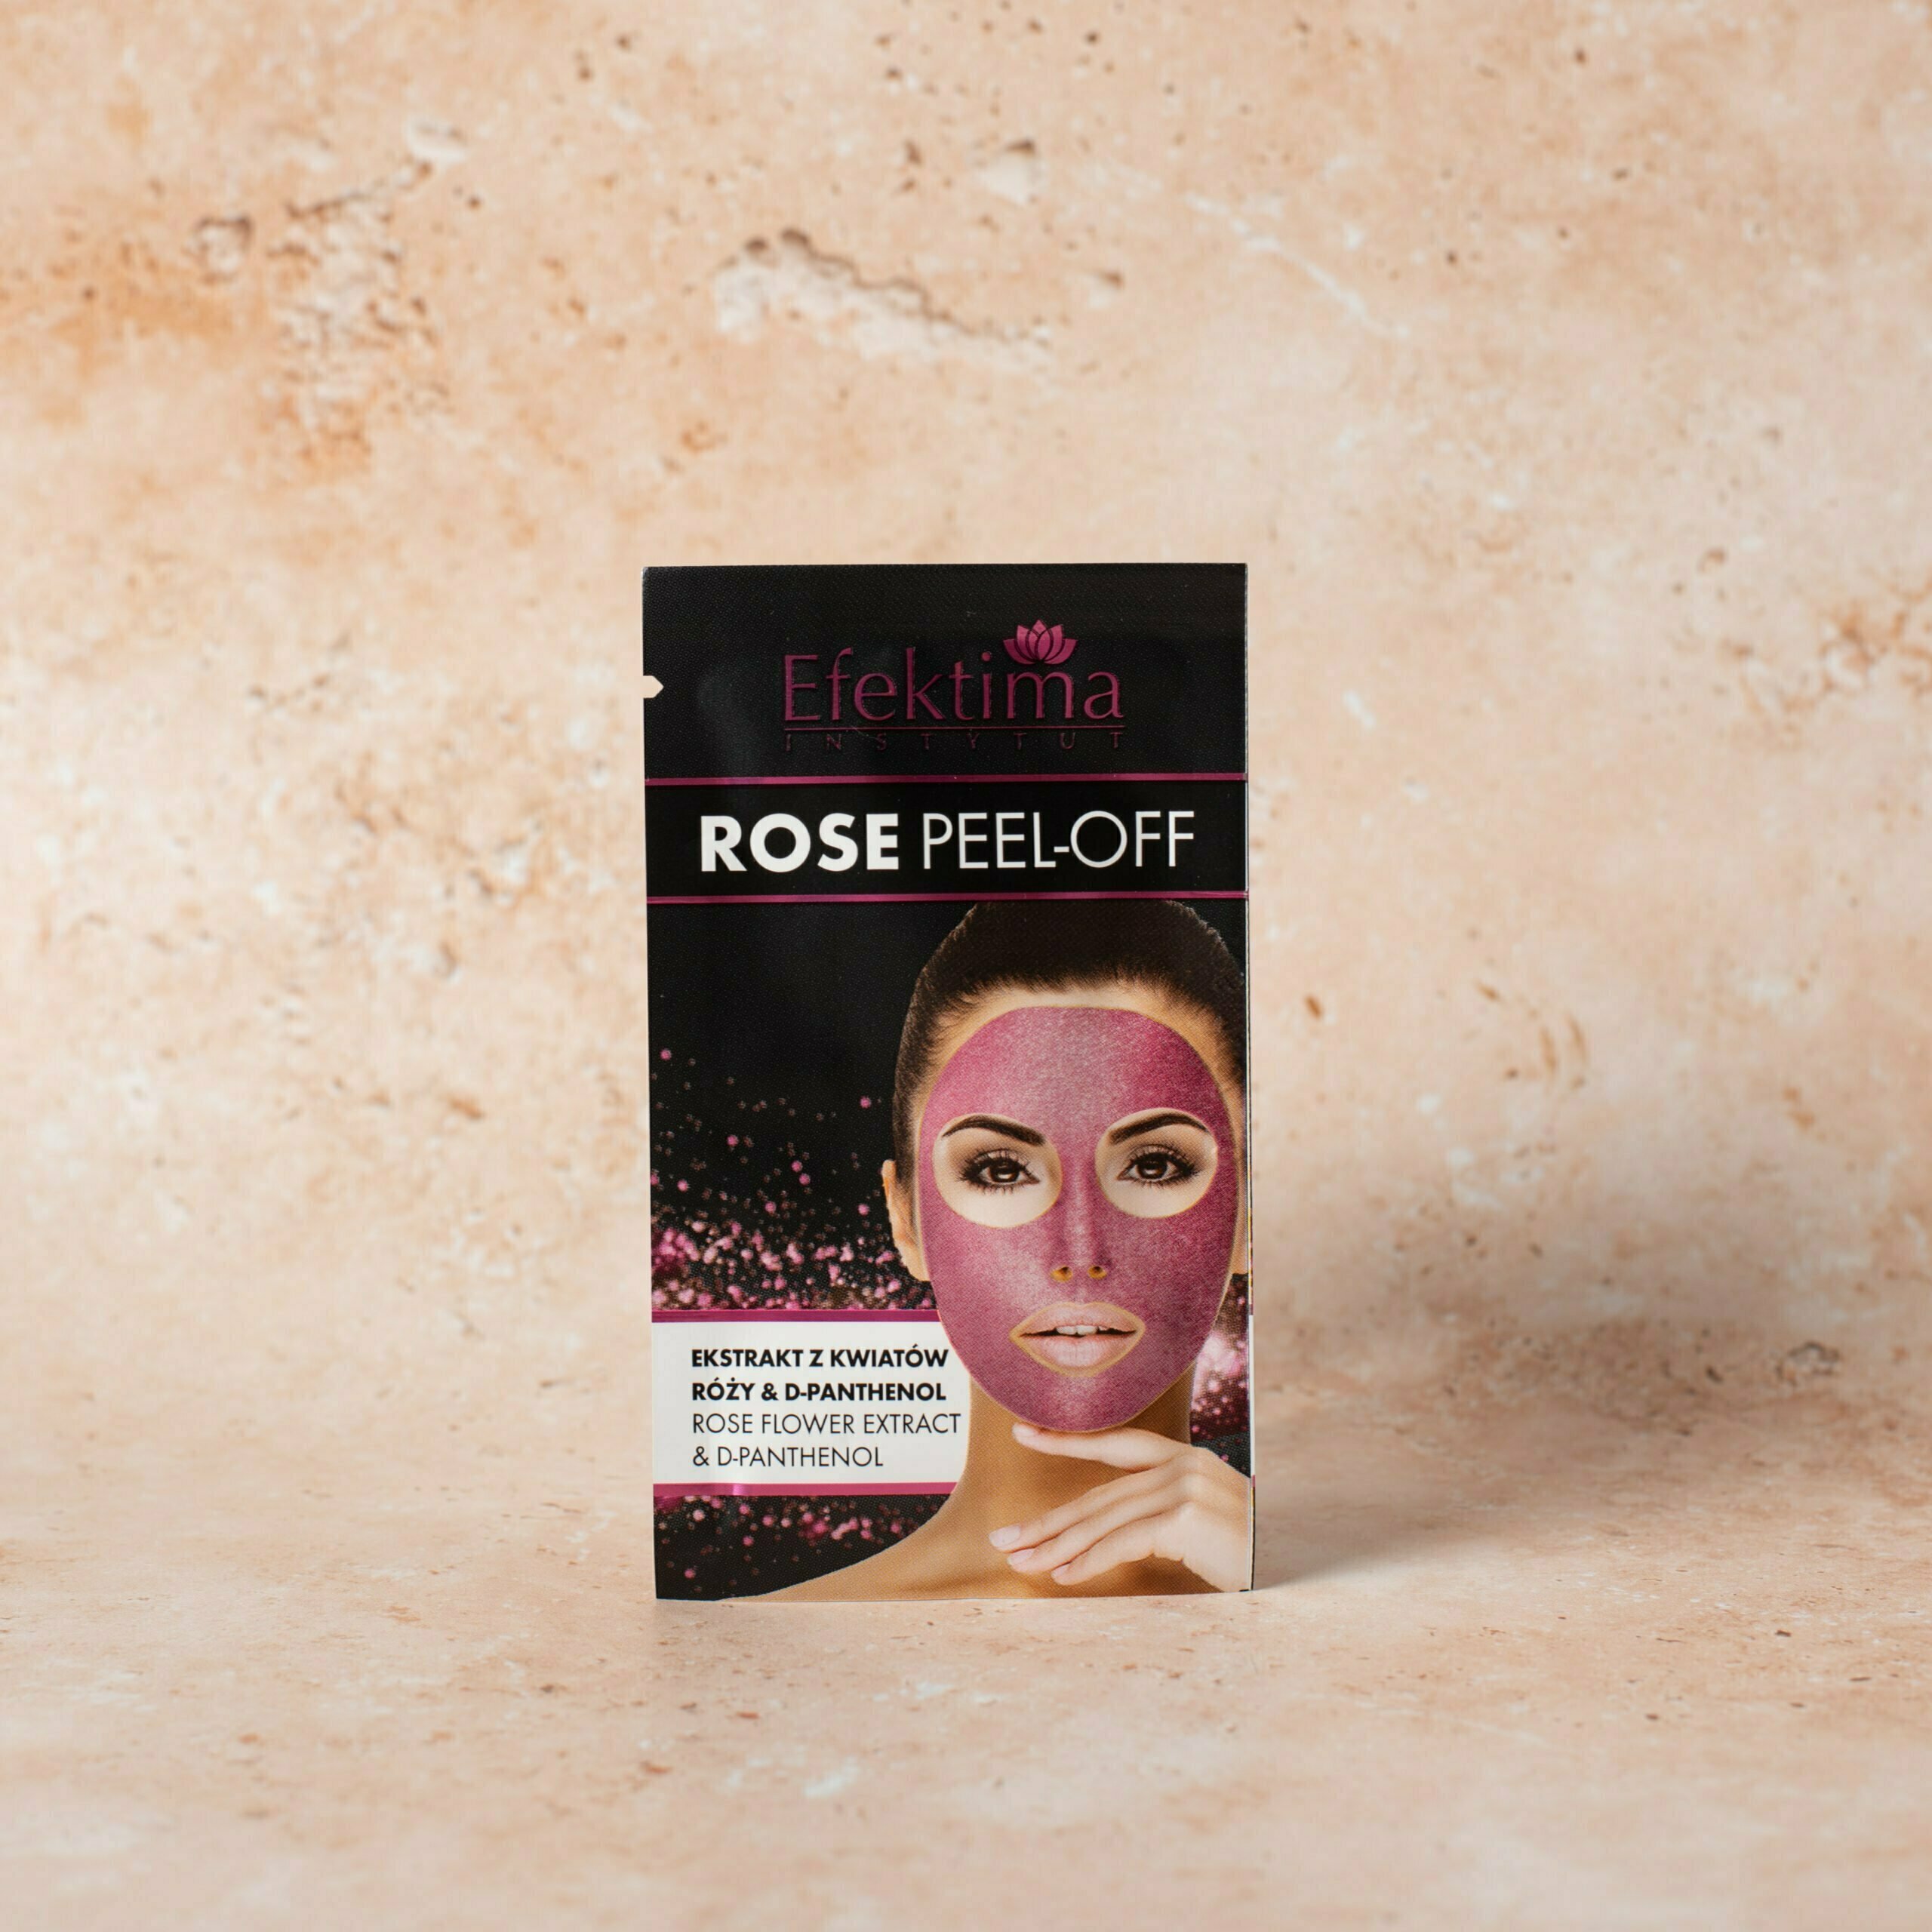 Rose Peel-off face mask